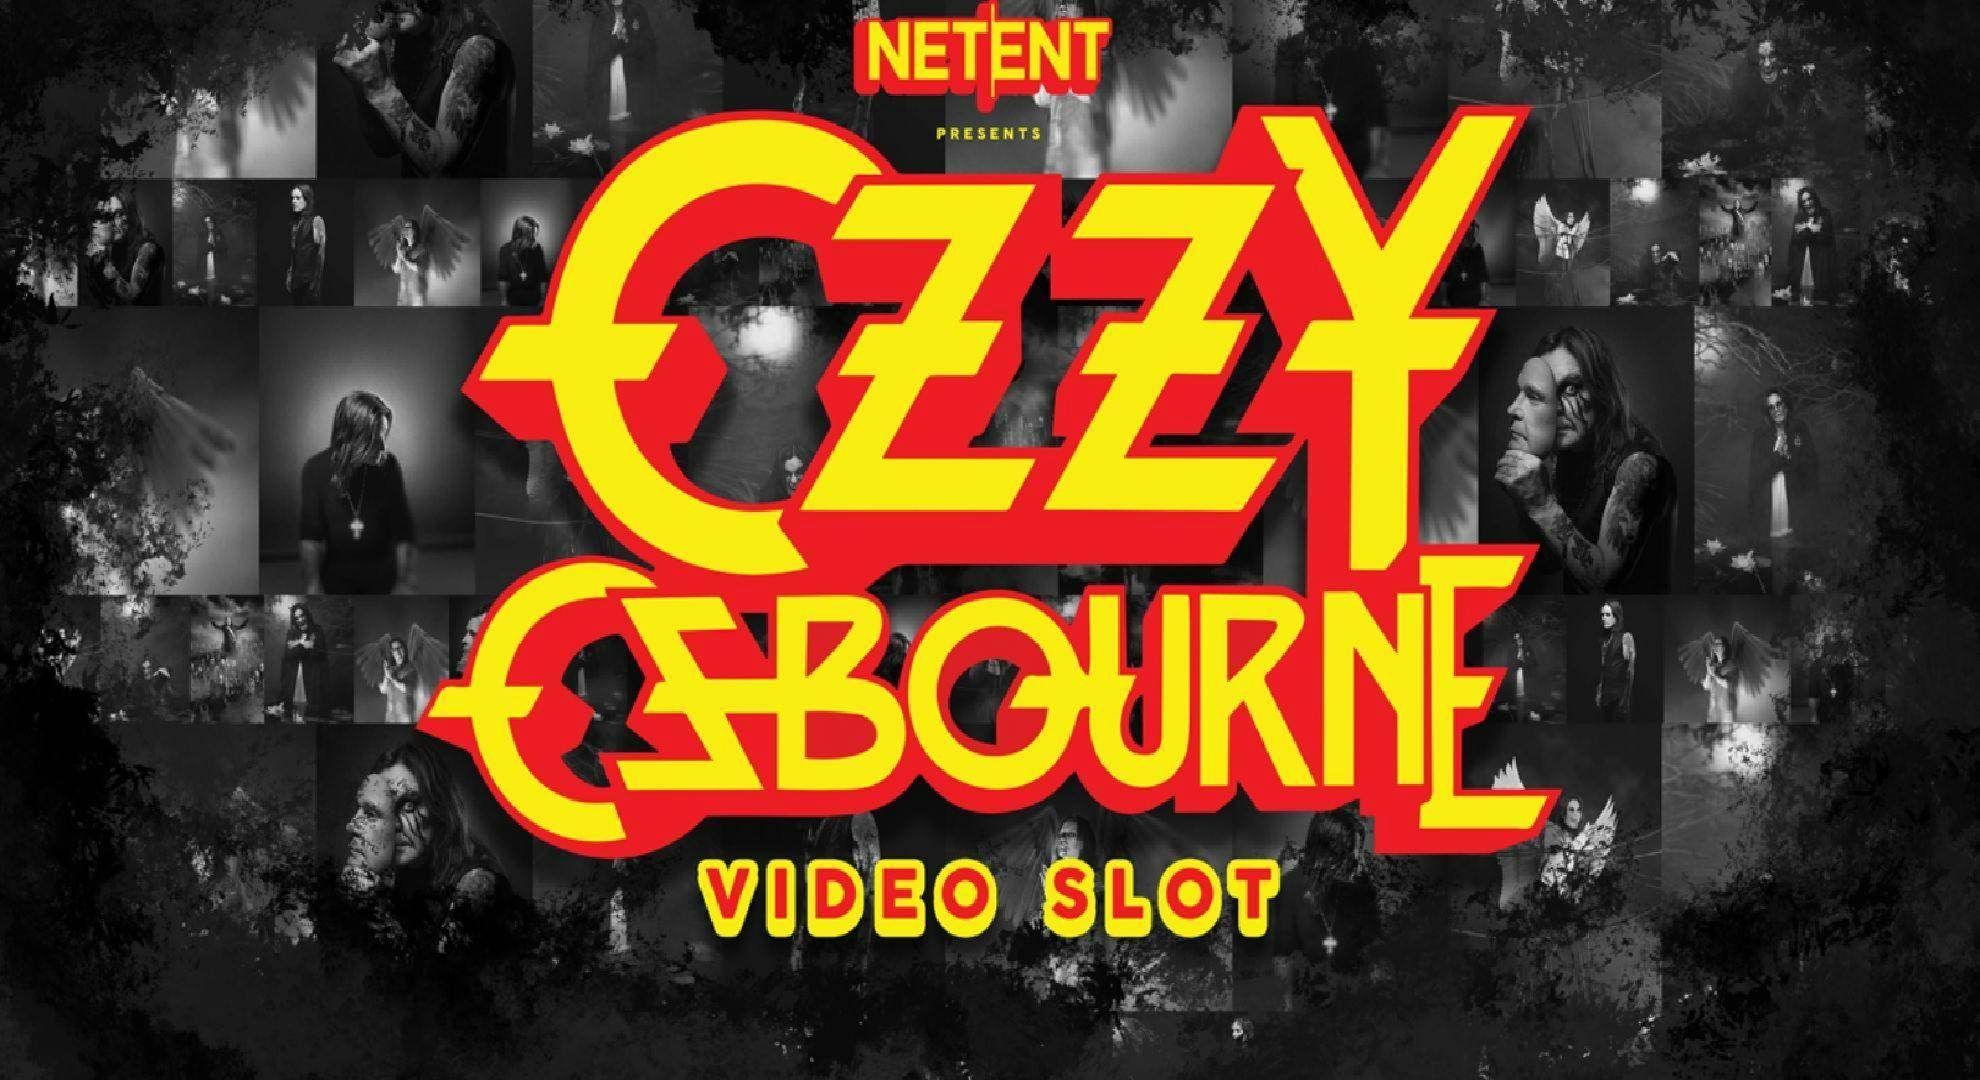 Ozzy Osbourne Video Slots Slot Online Free Play